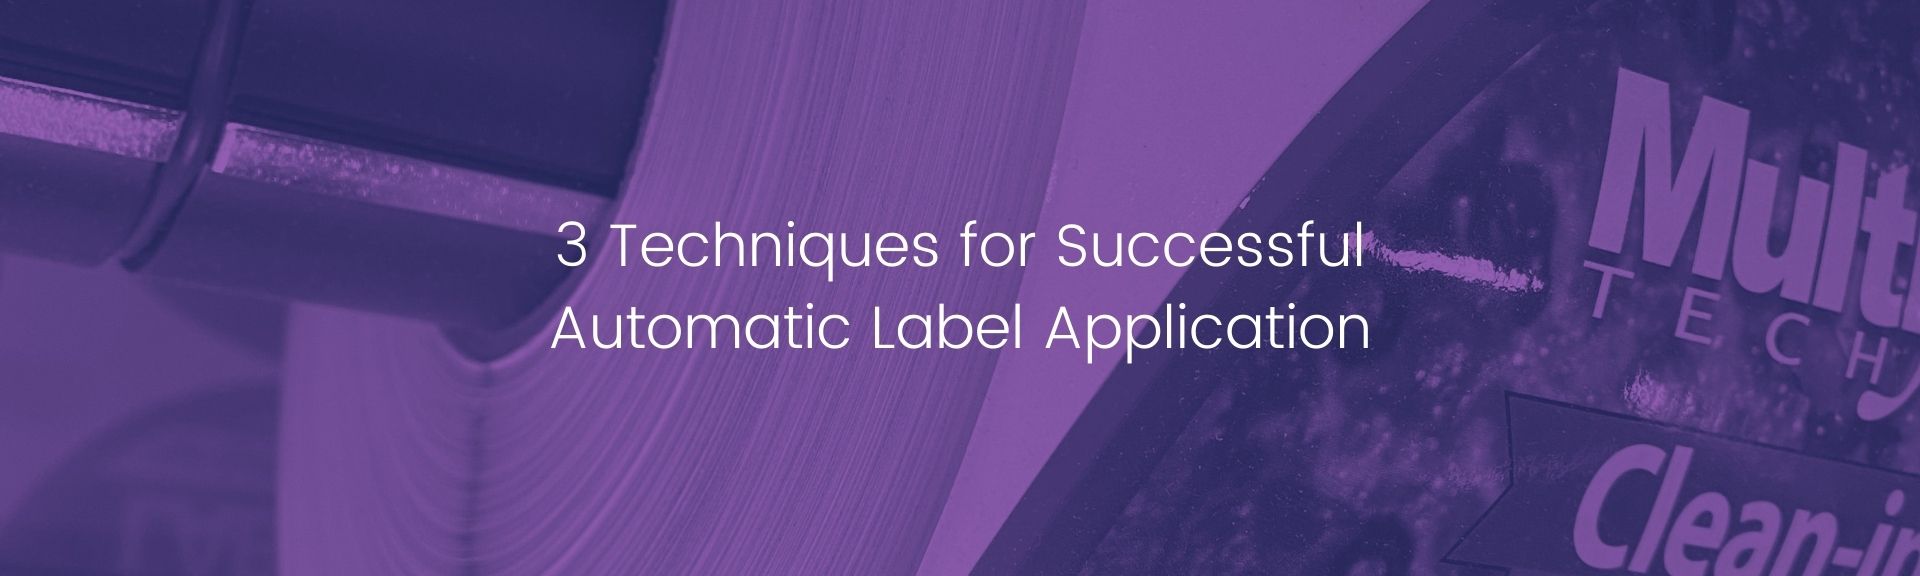 3 Techniques for Successful Automatic Label App3 Techniques for Successful Automatic Label Applicationlication